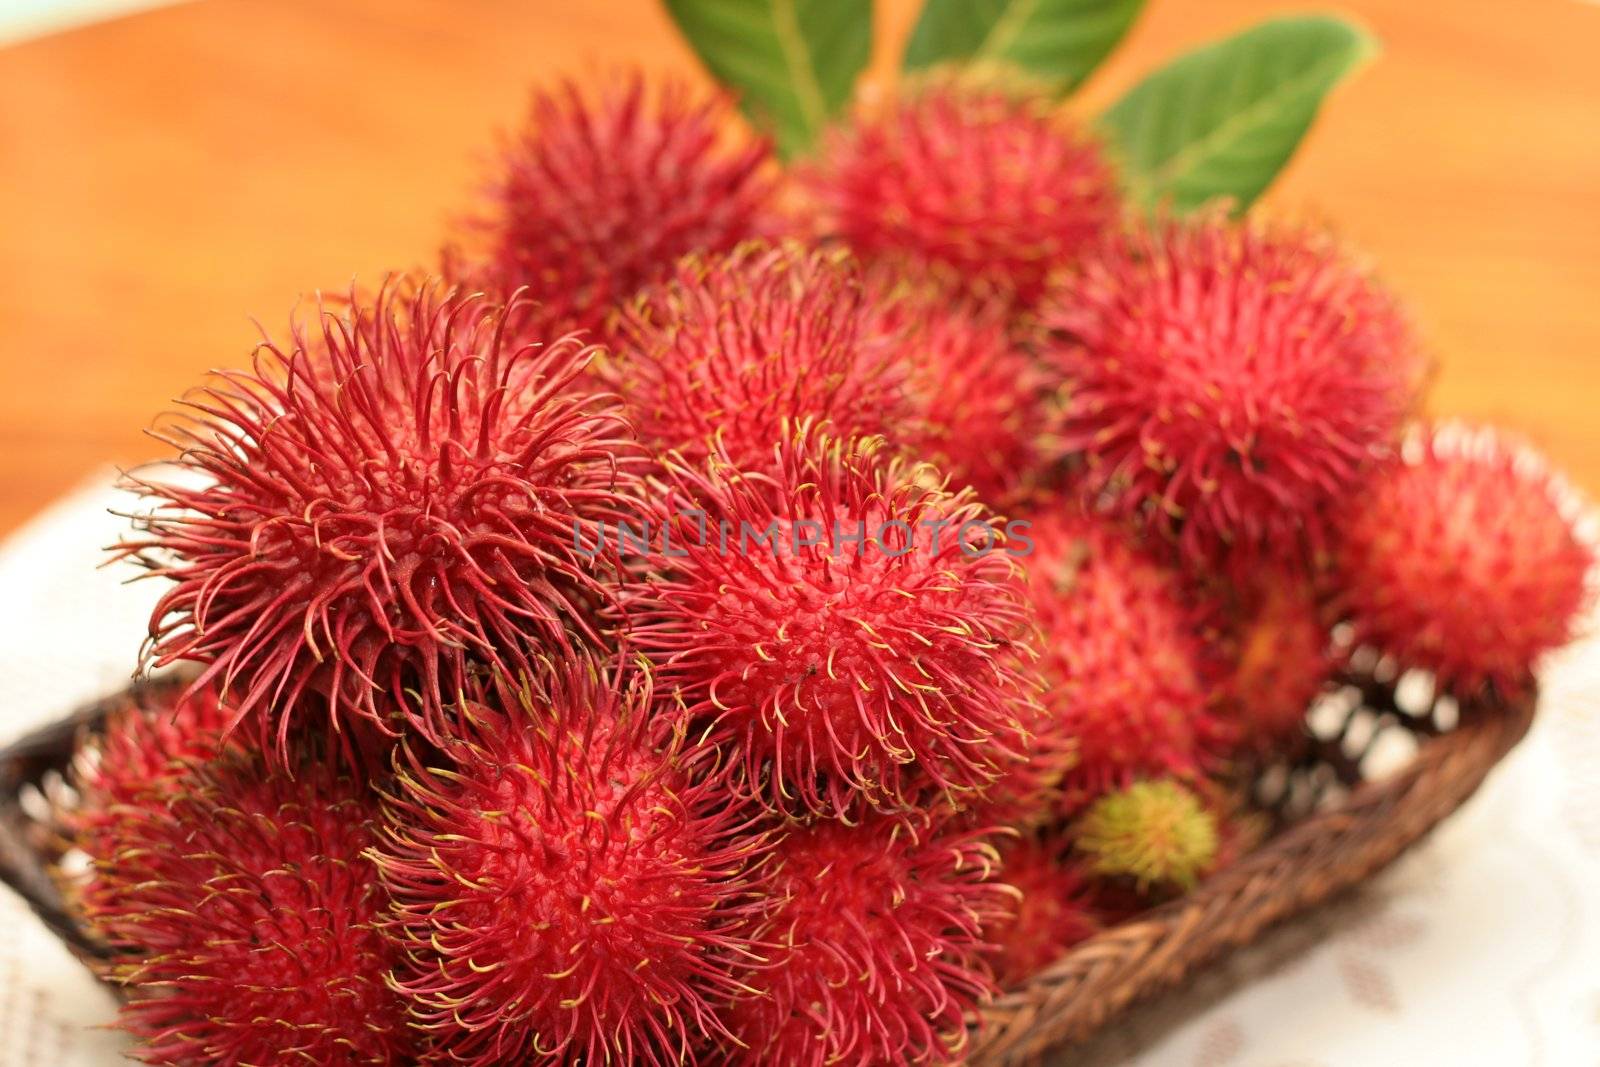 a tray of red hairy rambutan fruits
